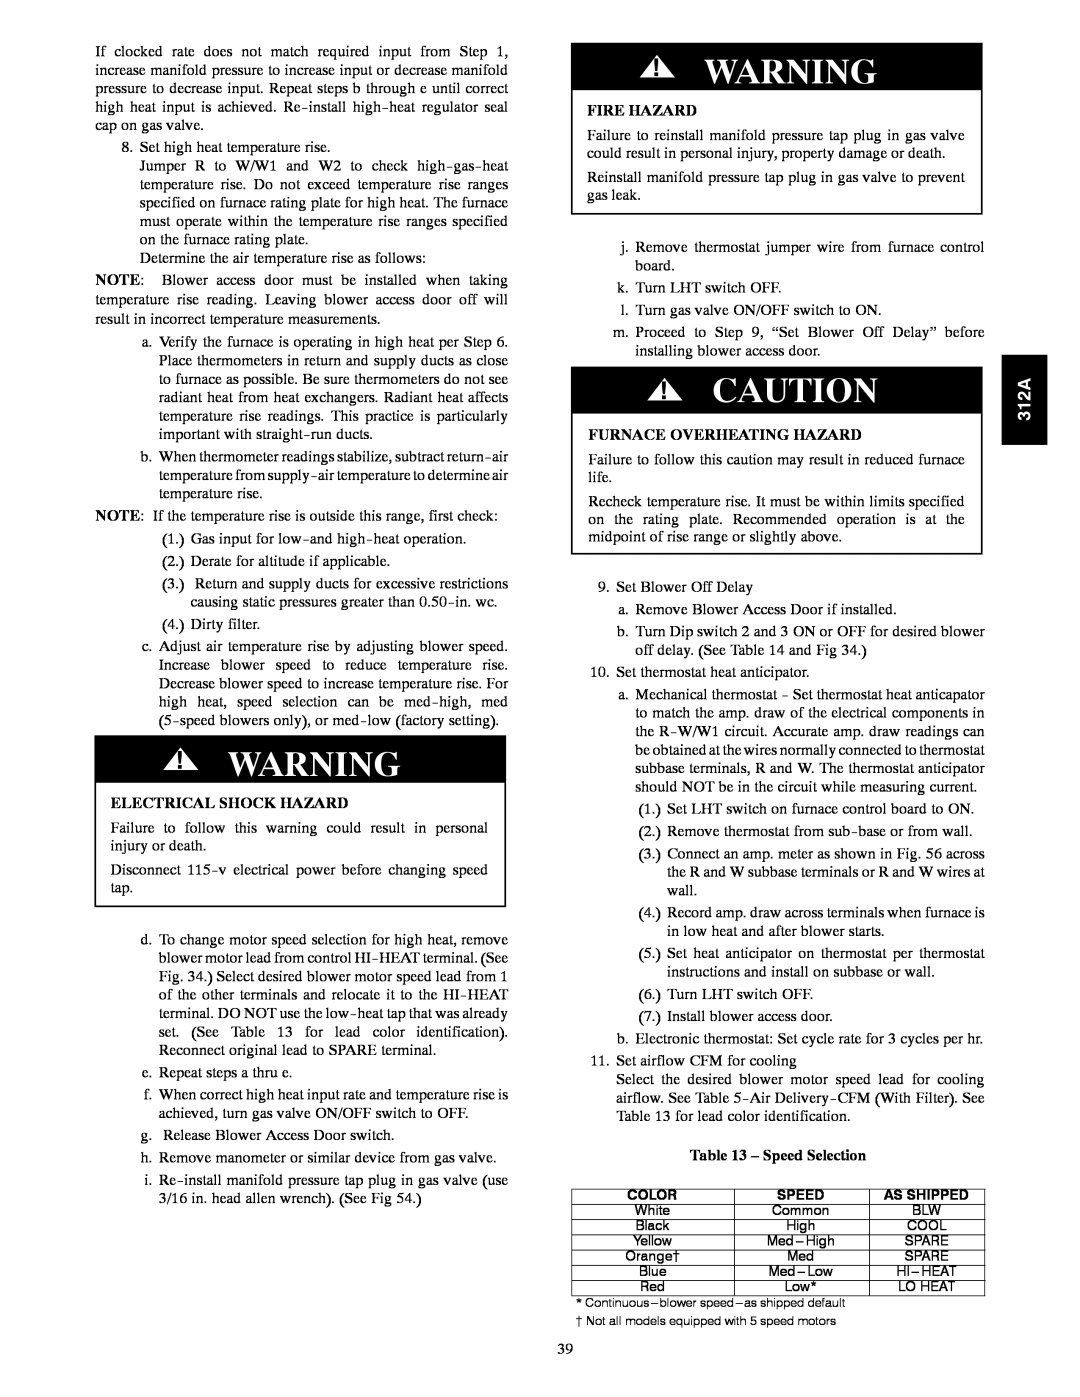 Bryant 120 instruction manual Speed Selection, 312A, Electrical Shock Hazard, Fire Hazard, Furnace Overheating Hazard 